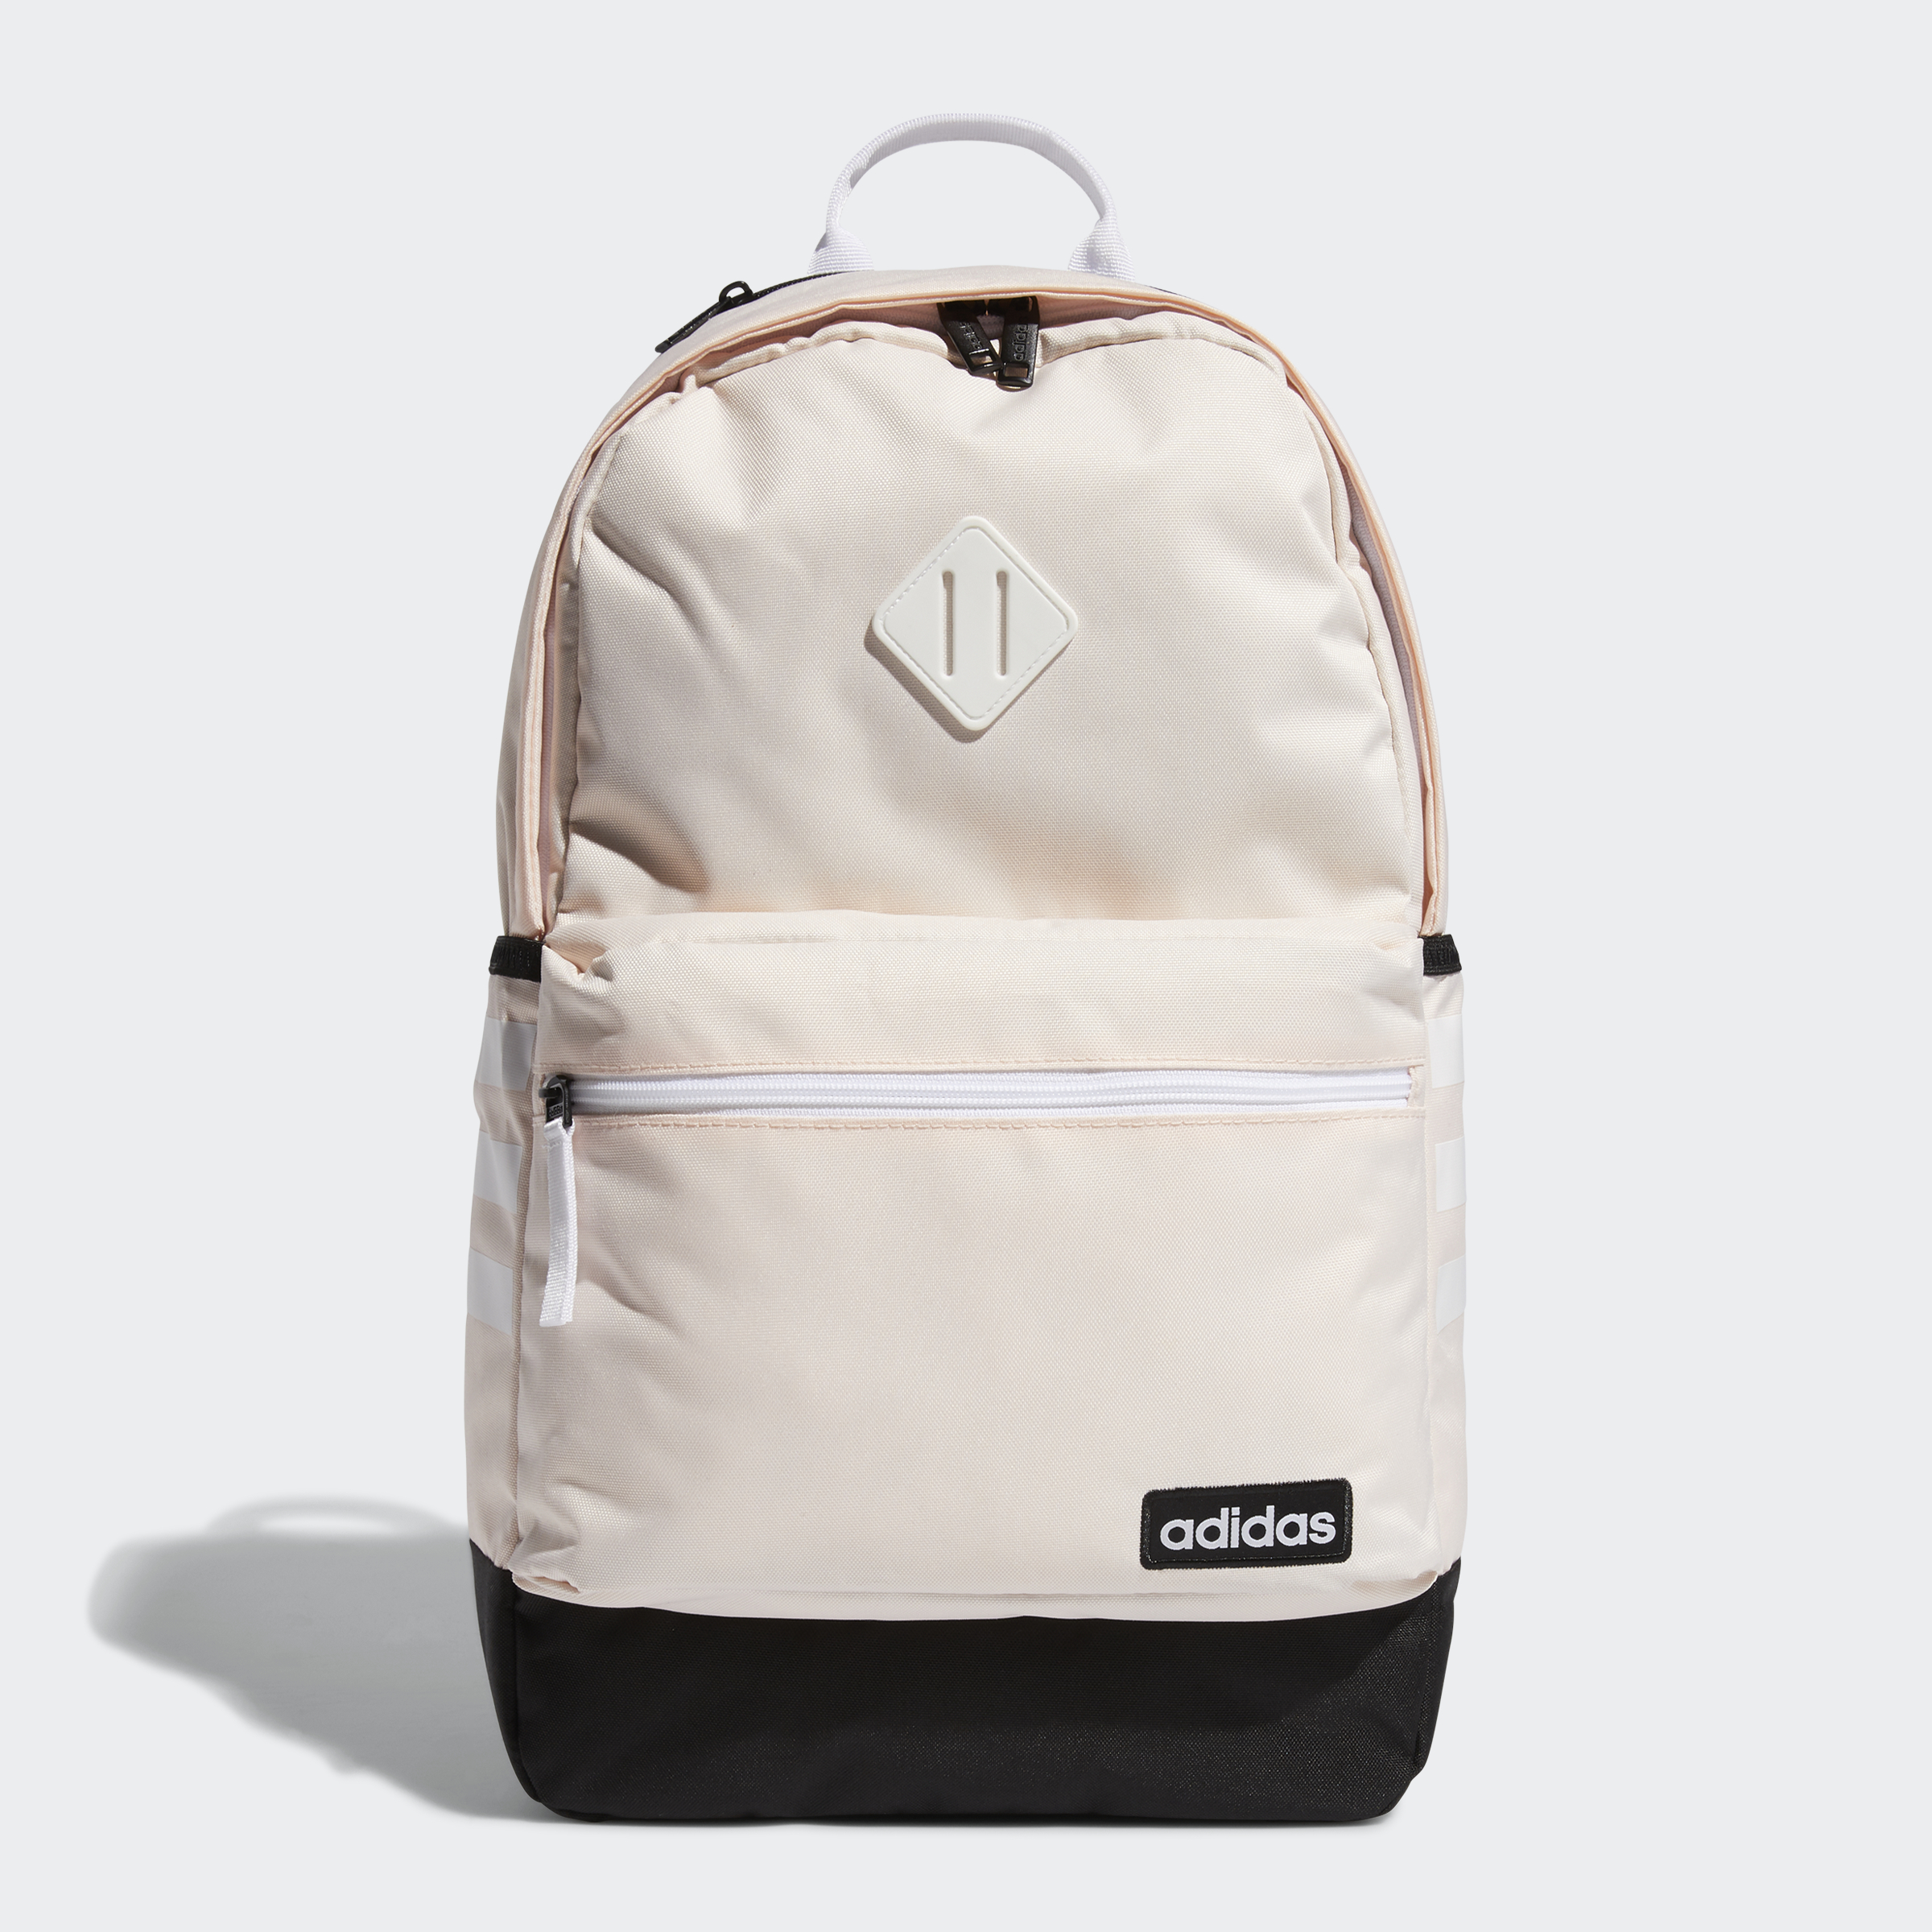 adidas Classic 3-Stripes 3 Backpack Bags | eBay